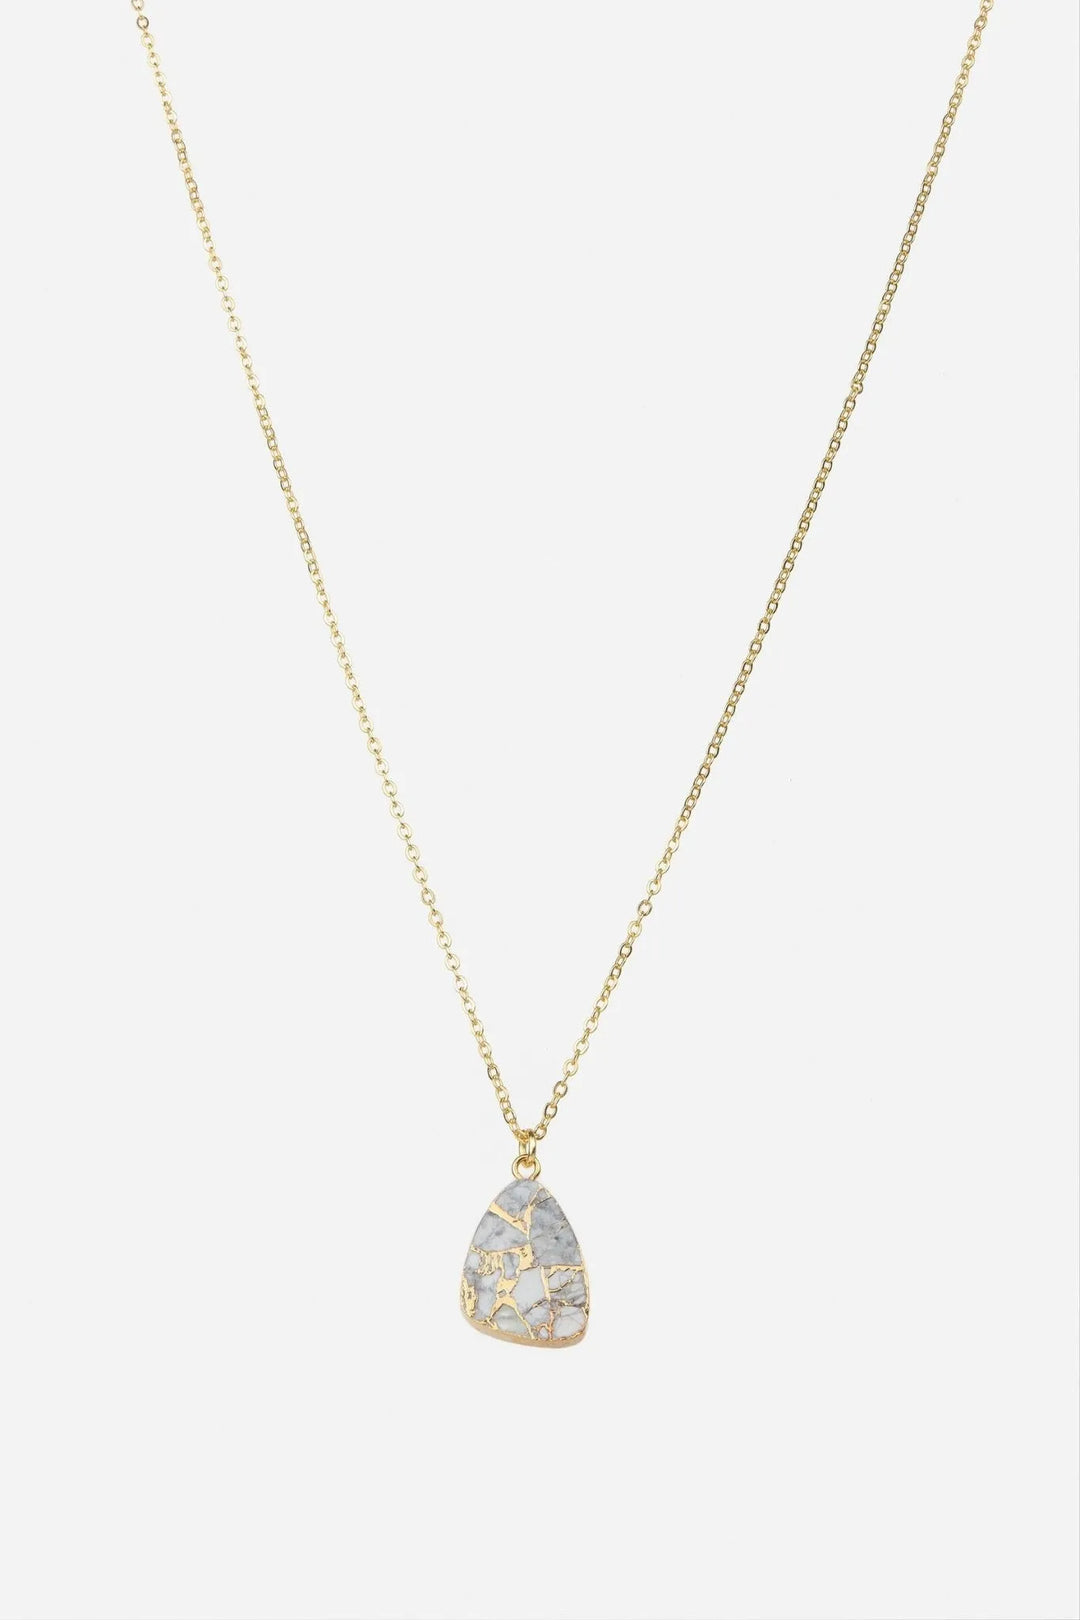 Mojave Triangle Mixed Gemstone Necklace White